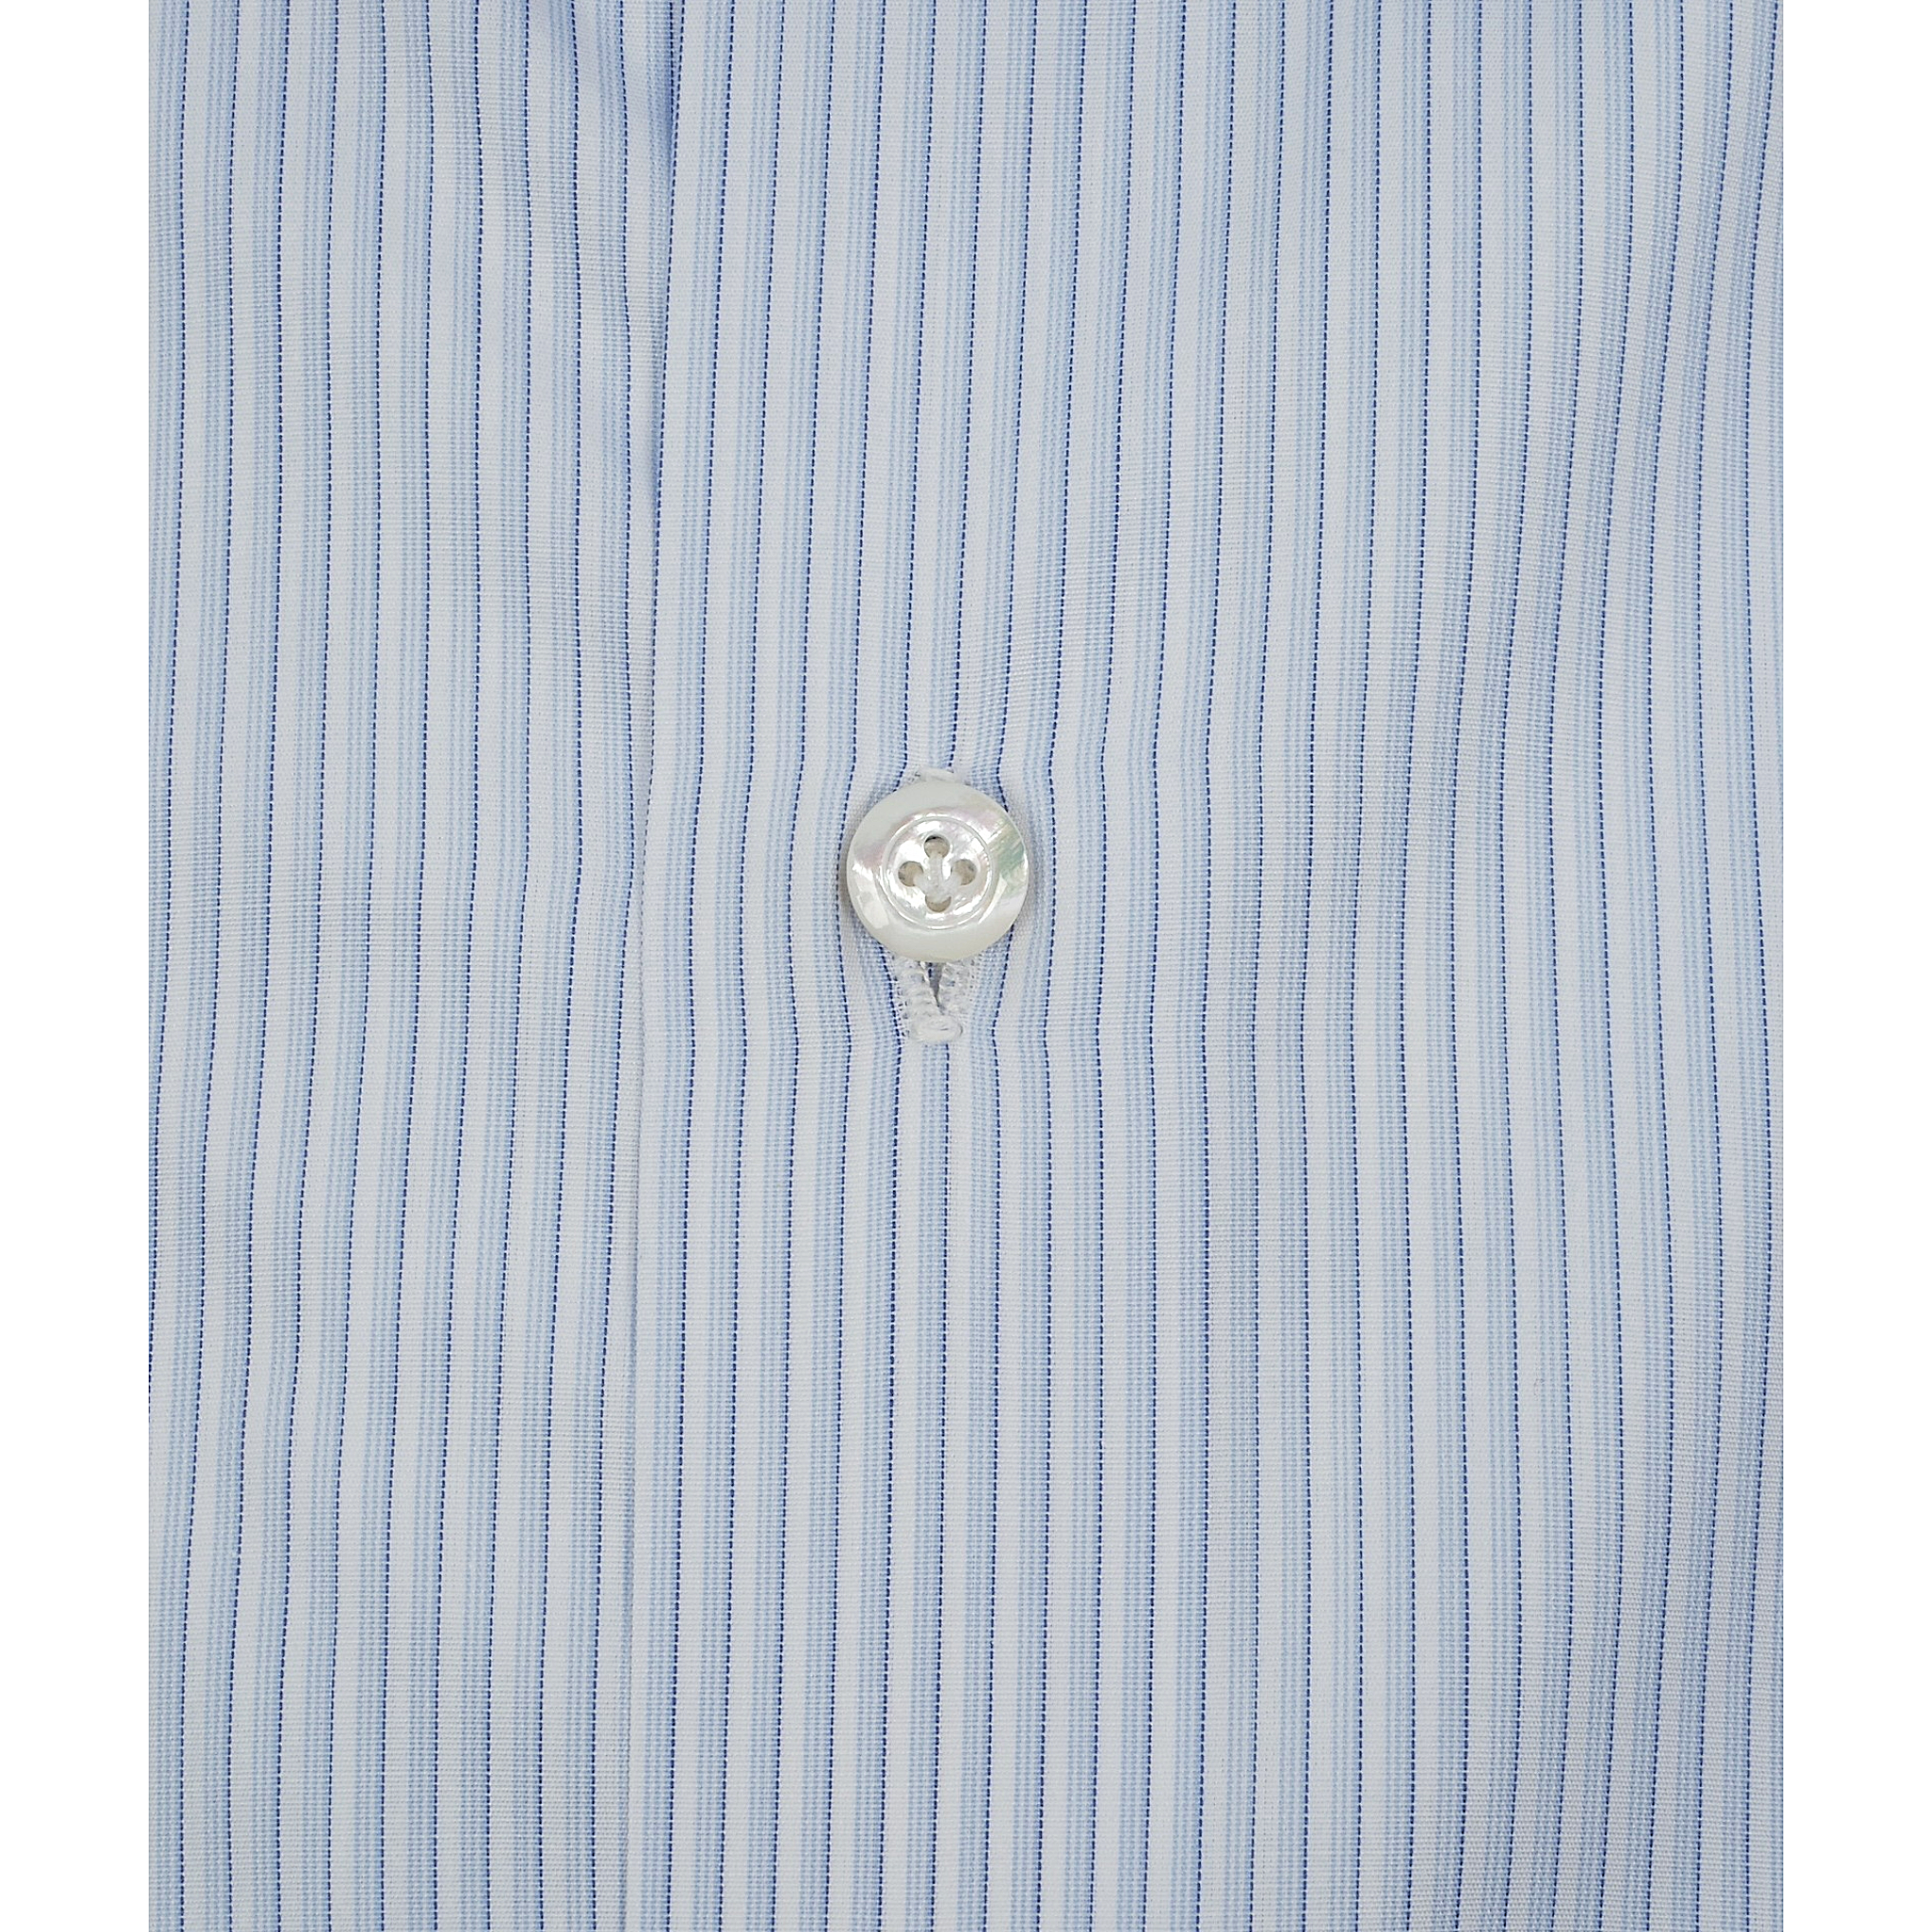 Napoli regular striped dress shirt in popeline cotton